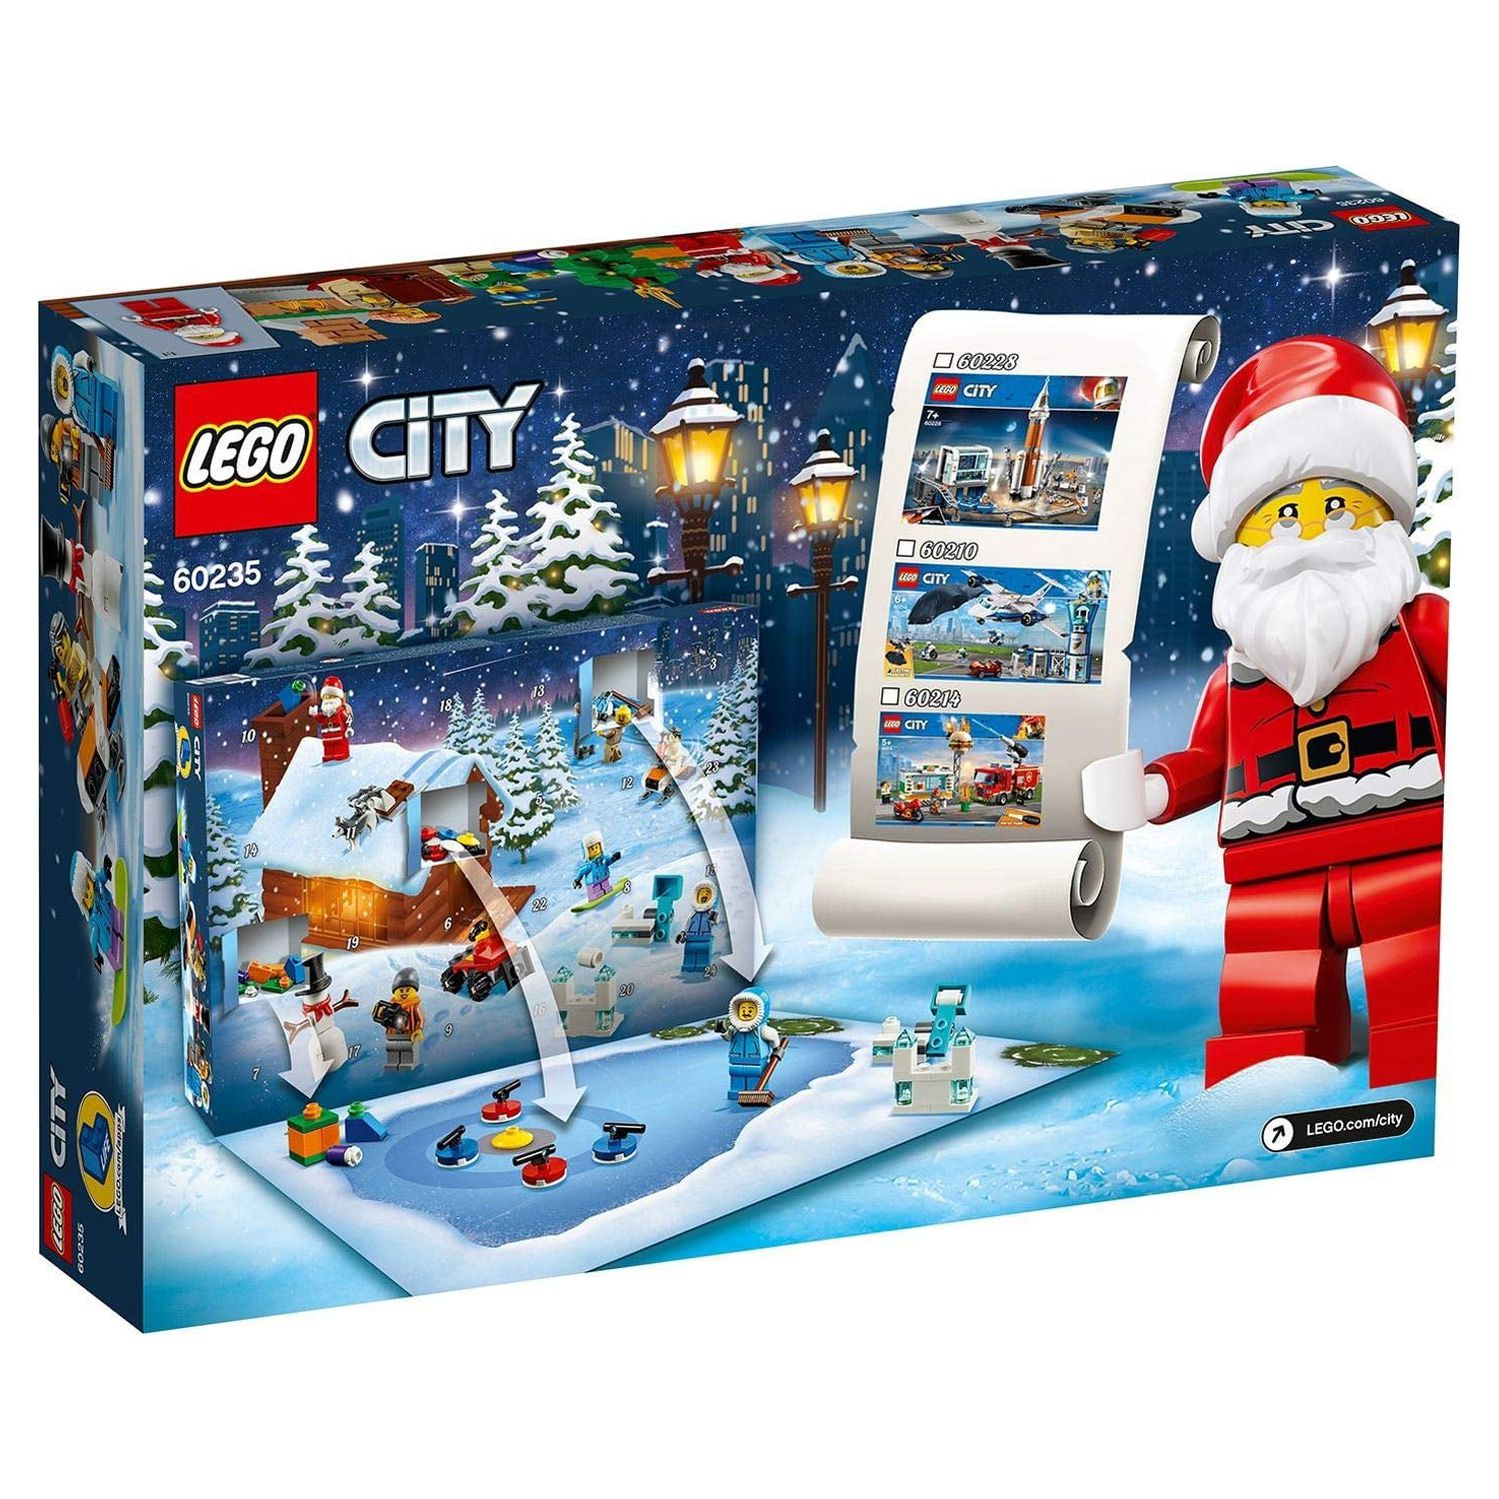 Lego 60235 City Advent Calendar Building Kit, New 2019 (234 Pieces) - image 3 of 3